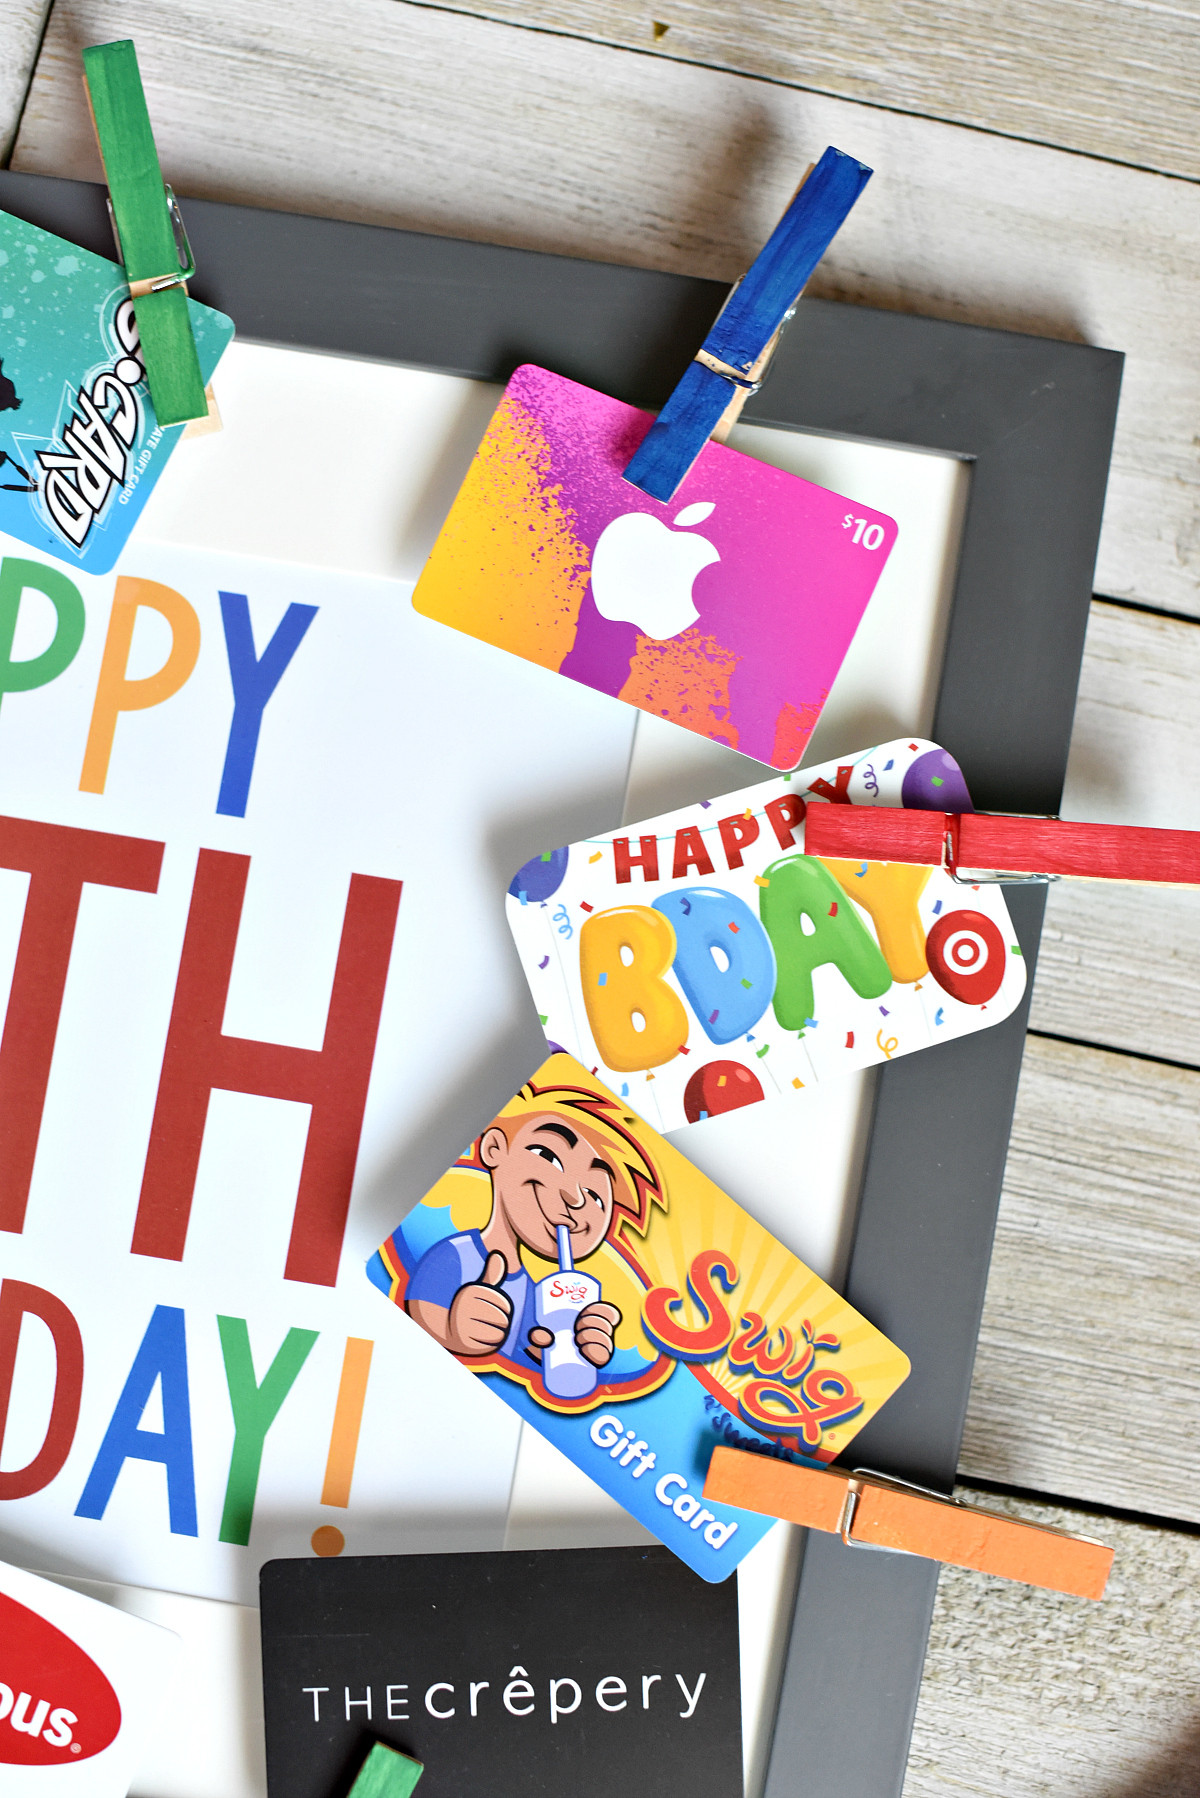 Birthday Gift Ideas For 10 Year Old Girls
 Fun Birthday Gifts for 10 Year Old Boy or Girl – Fun Squared